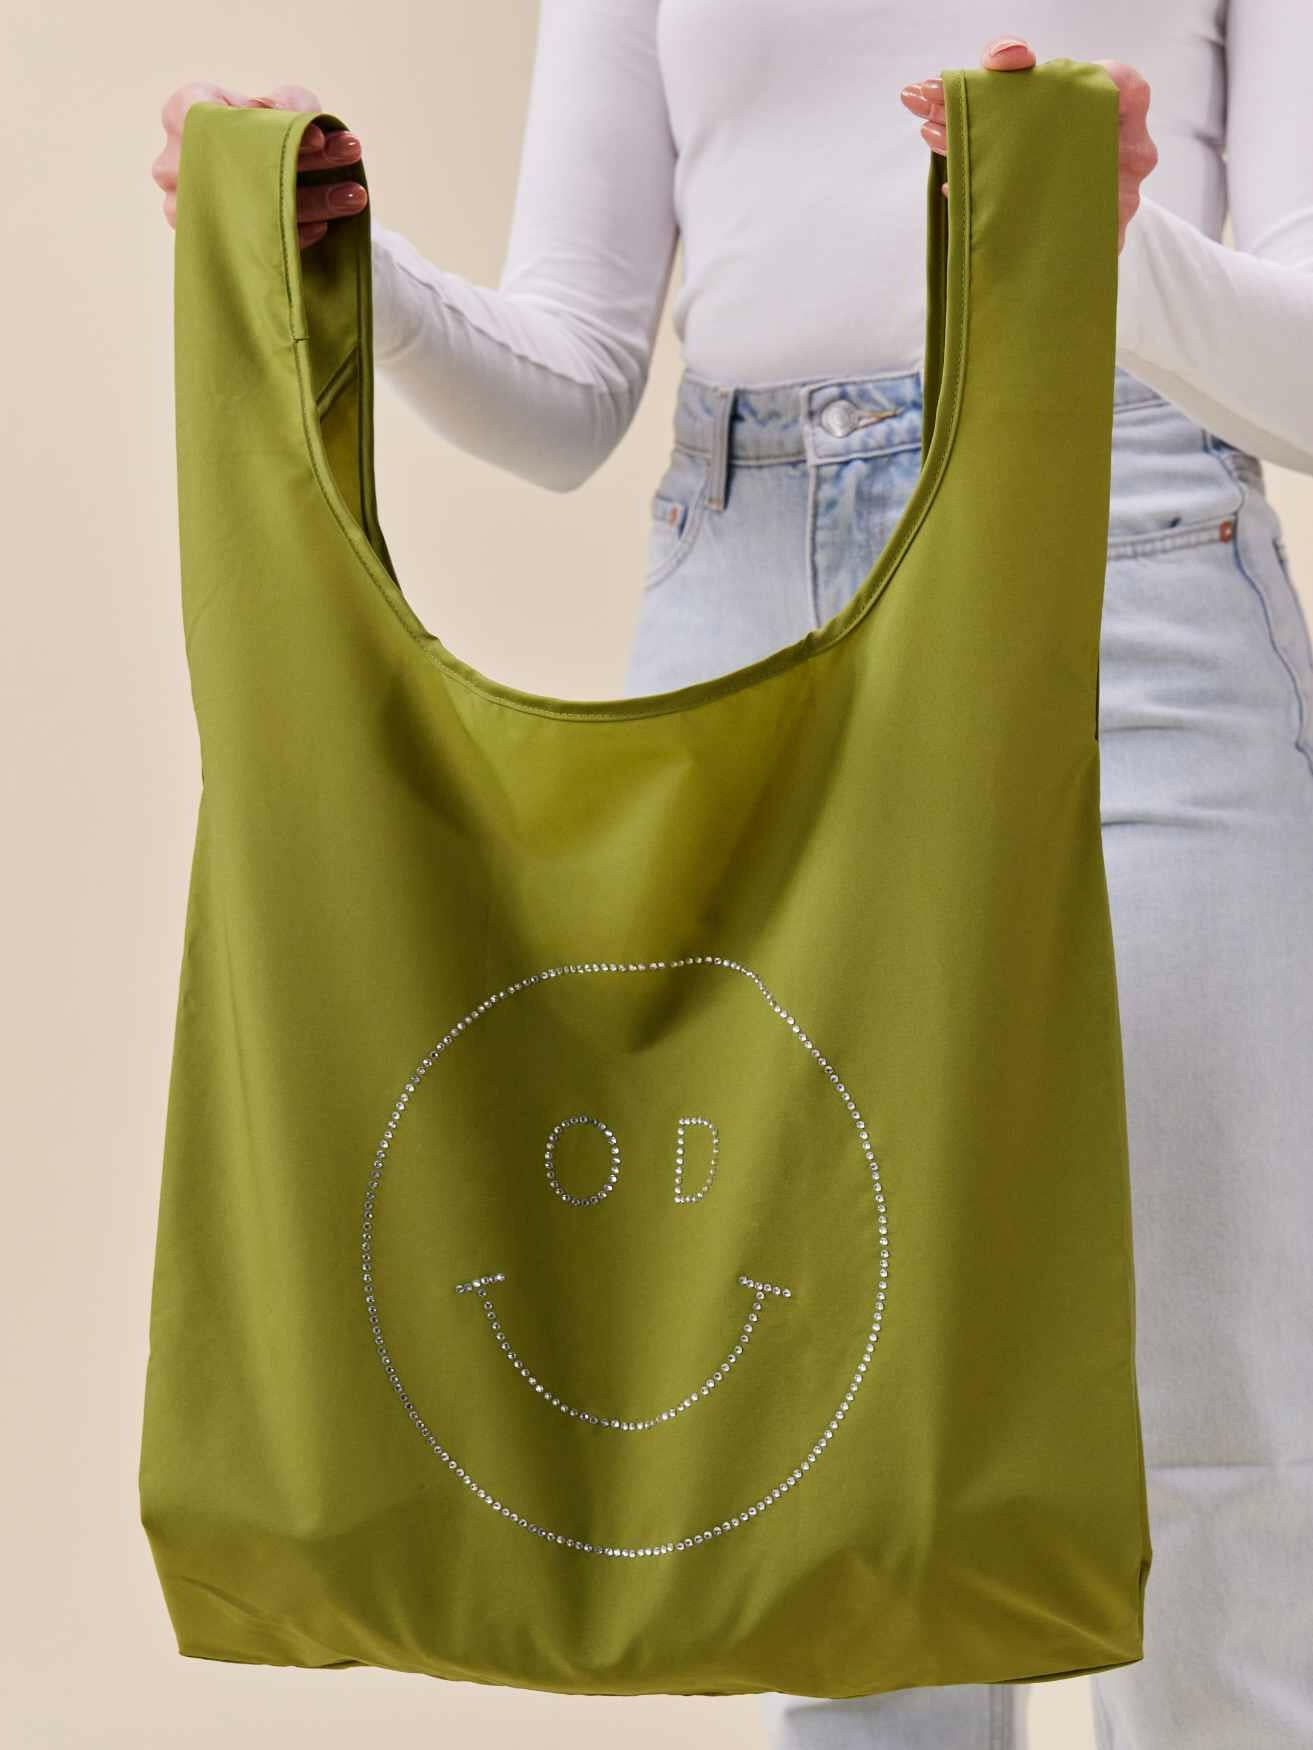 Olive Crystal Reusable Bag.